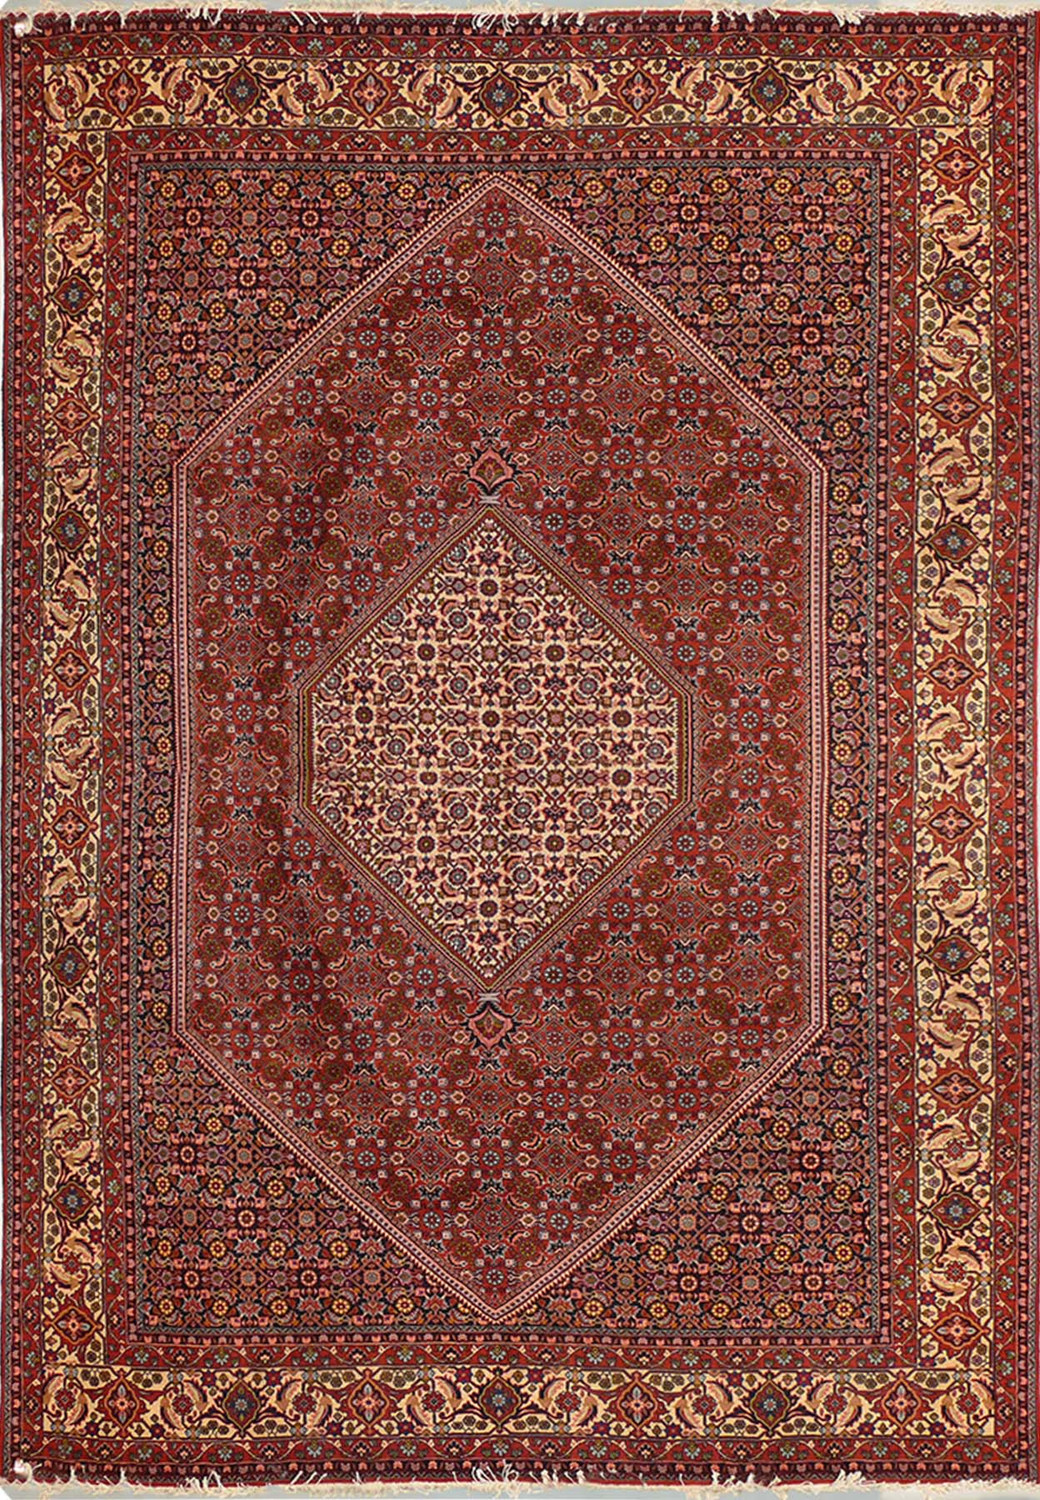 8'3 x 11'5 Persian Bijar Rug - Full view of rug, showcasing intricate design and vibrant colors